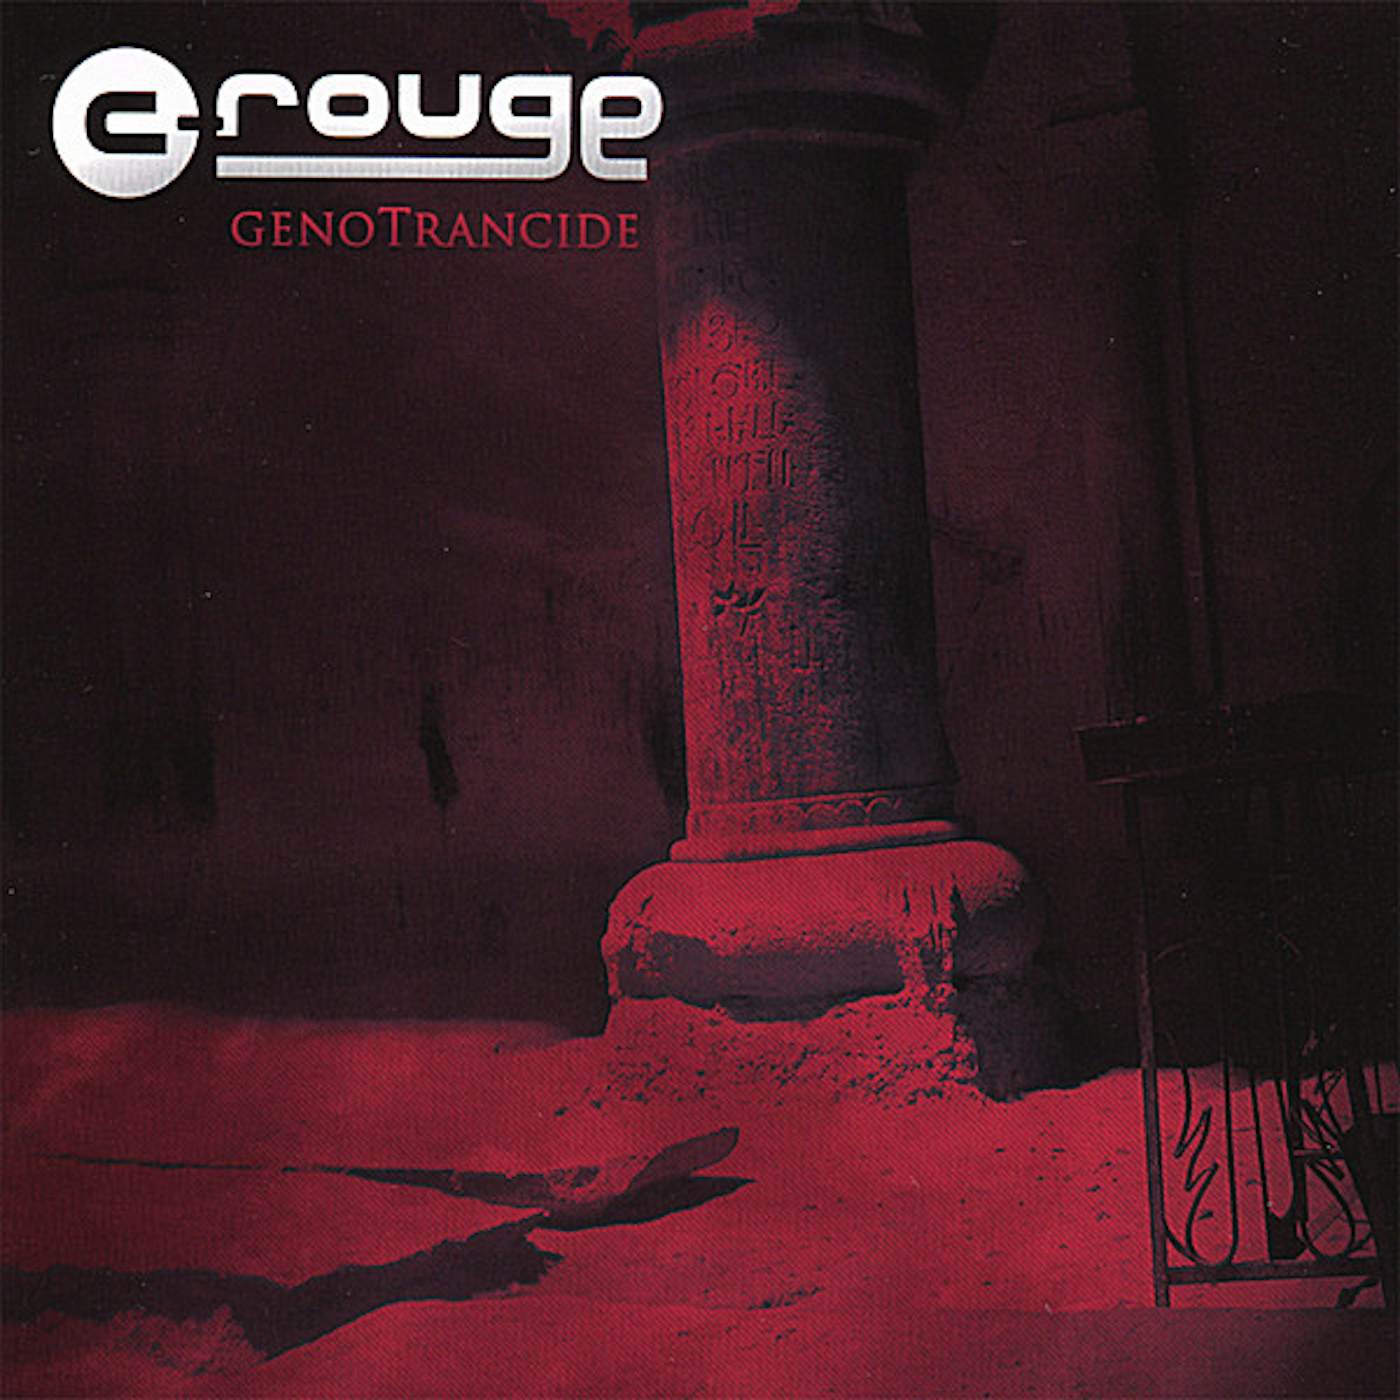 C-ROUGE GENOTRANCIDE CD